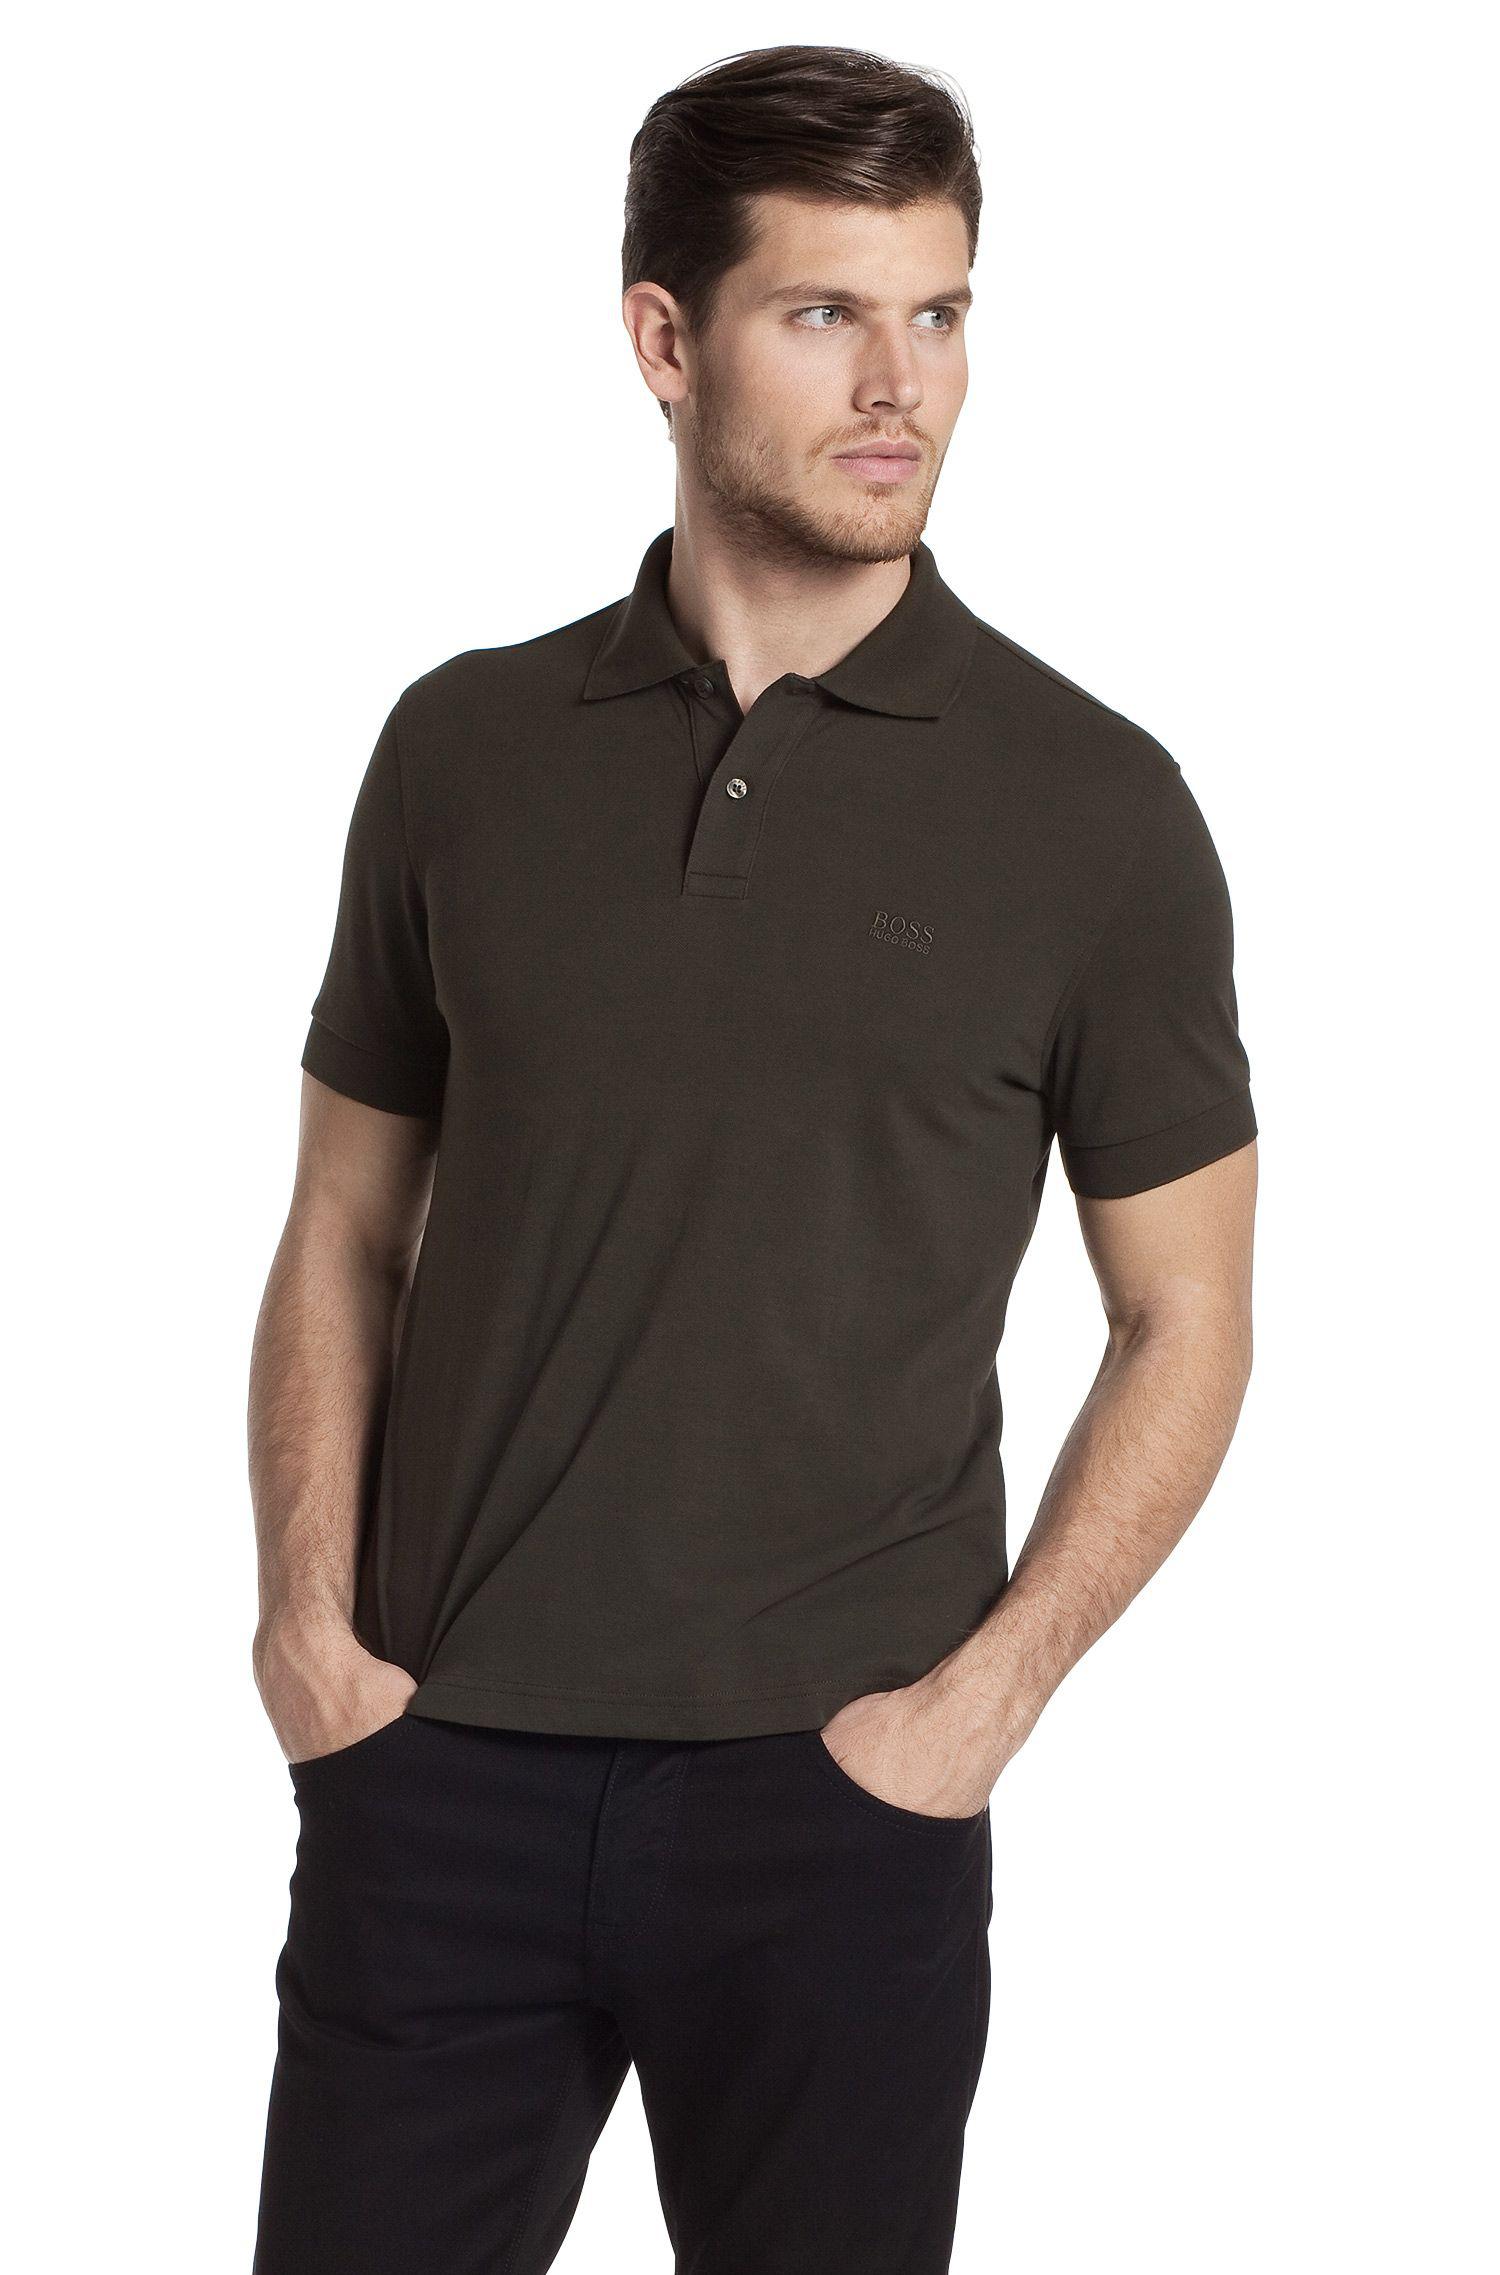 BOSS by HUGO BOSS Cotton Polo Shirt 'firenze/logo Modern Essential' in  Black for Men - Lyst